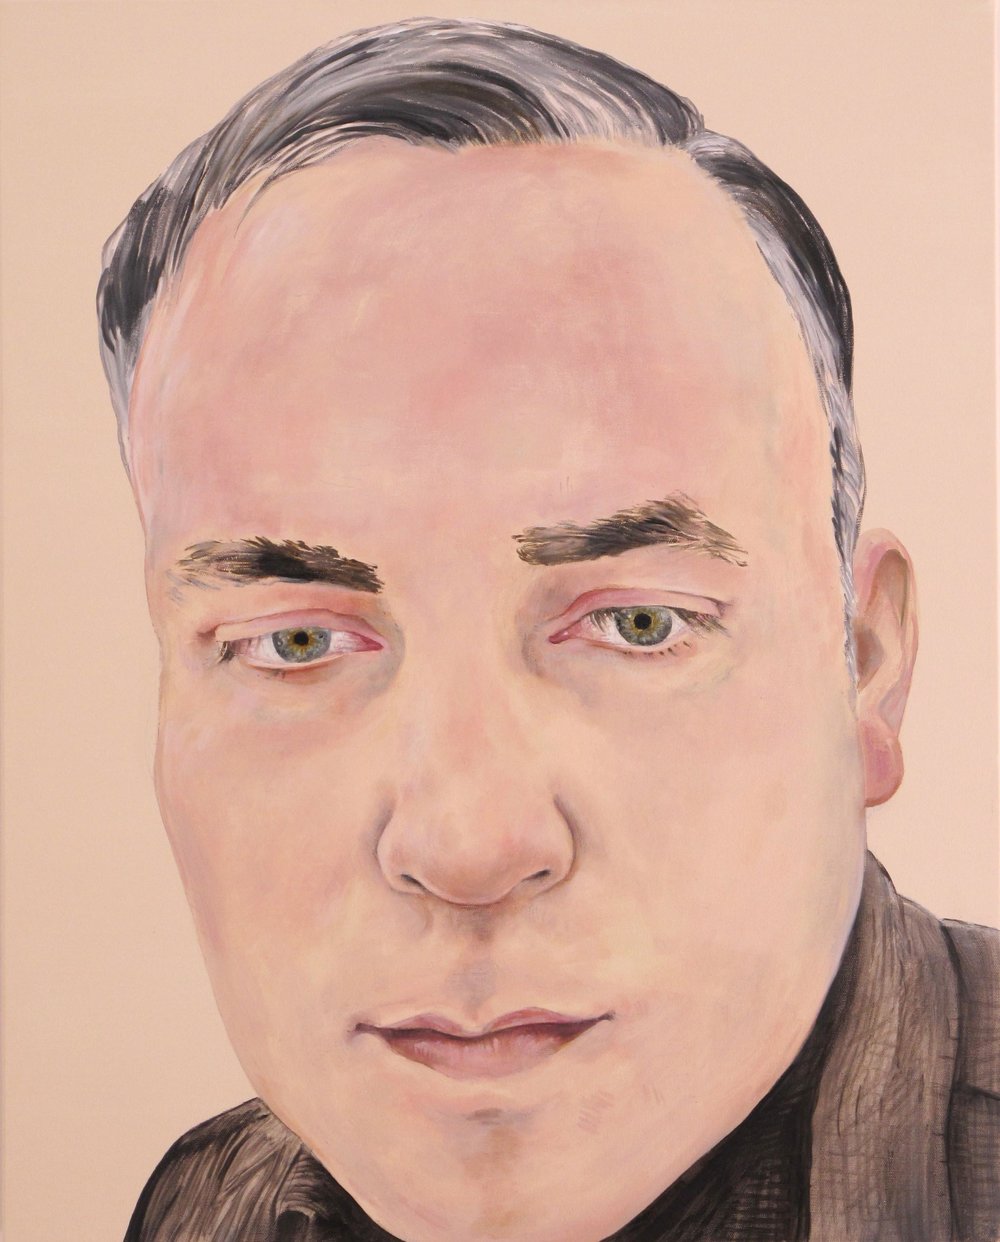 Noah Becker   Self Portrait #2,&nbsp; 2014 Oil on canvas 24 x 30"